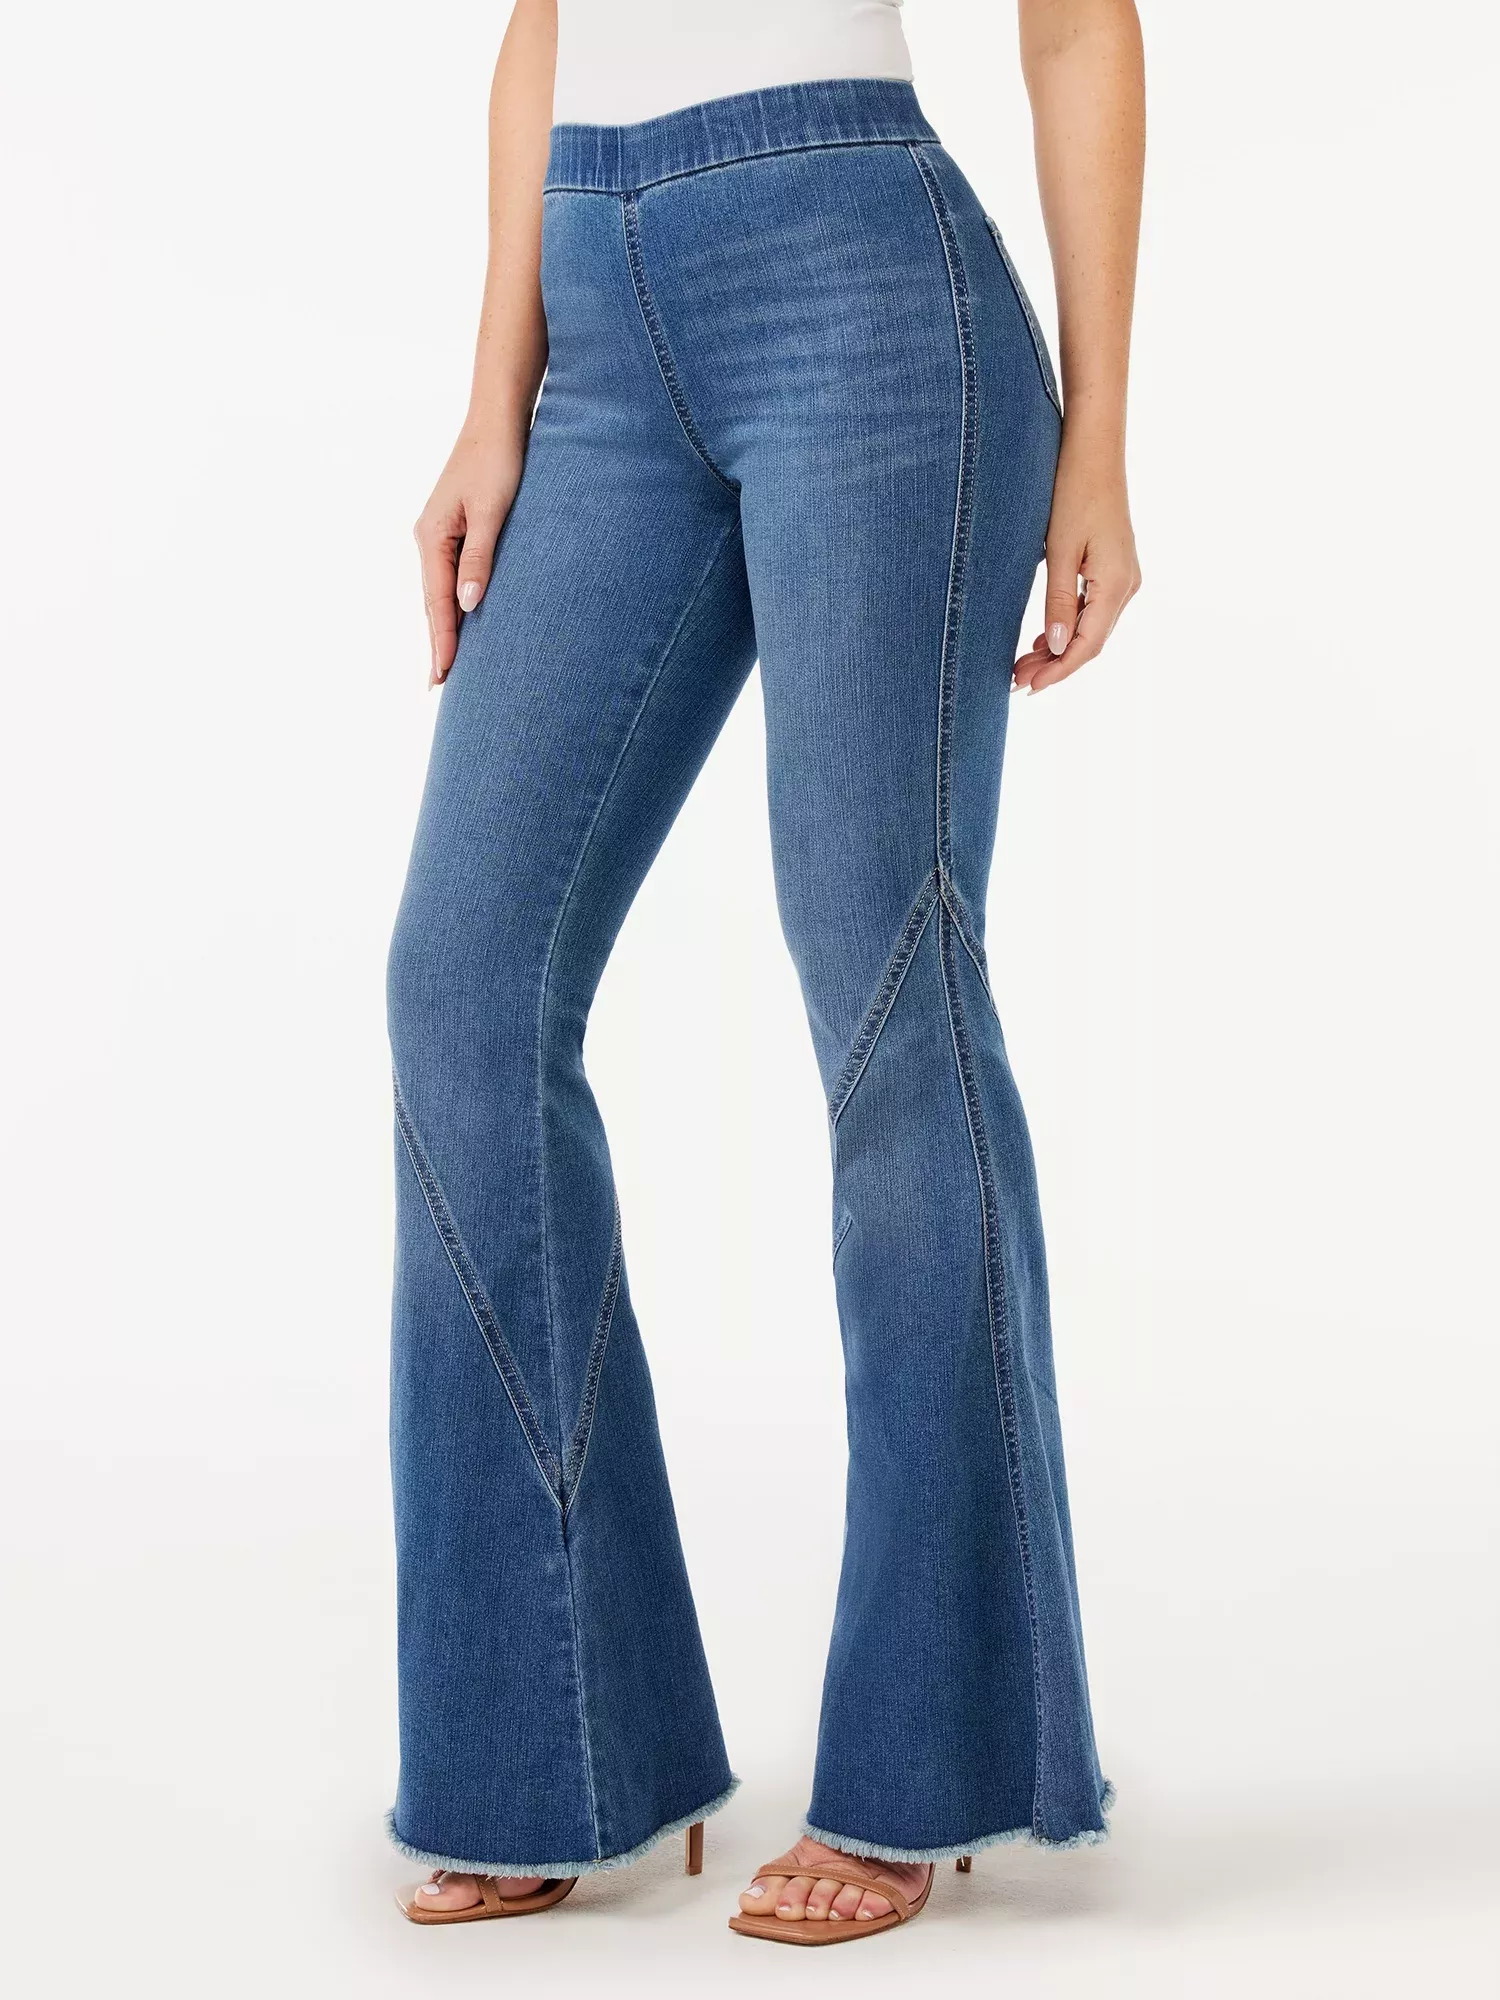 Sofia Vergara Denim Flare Jeans for Women